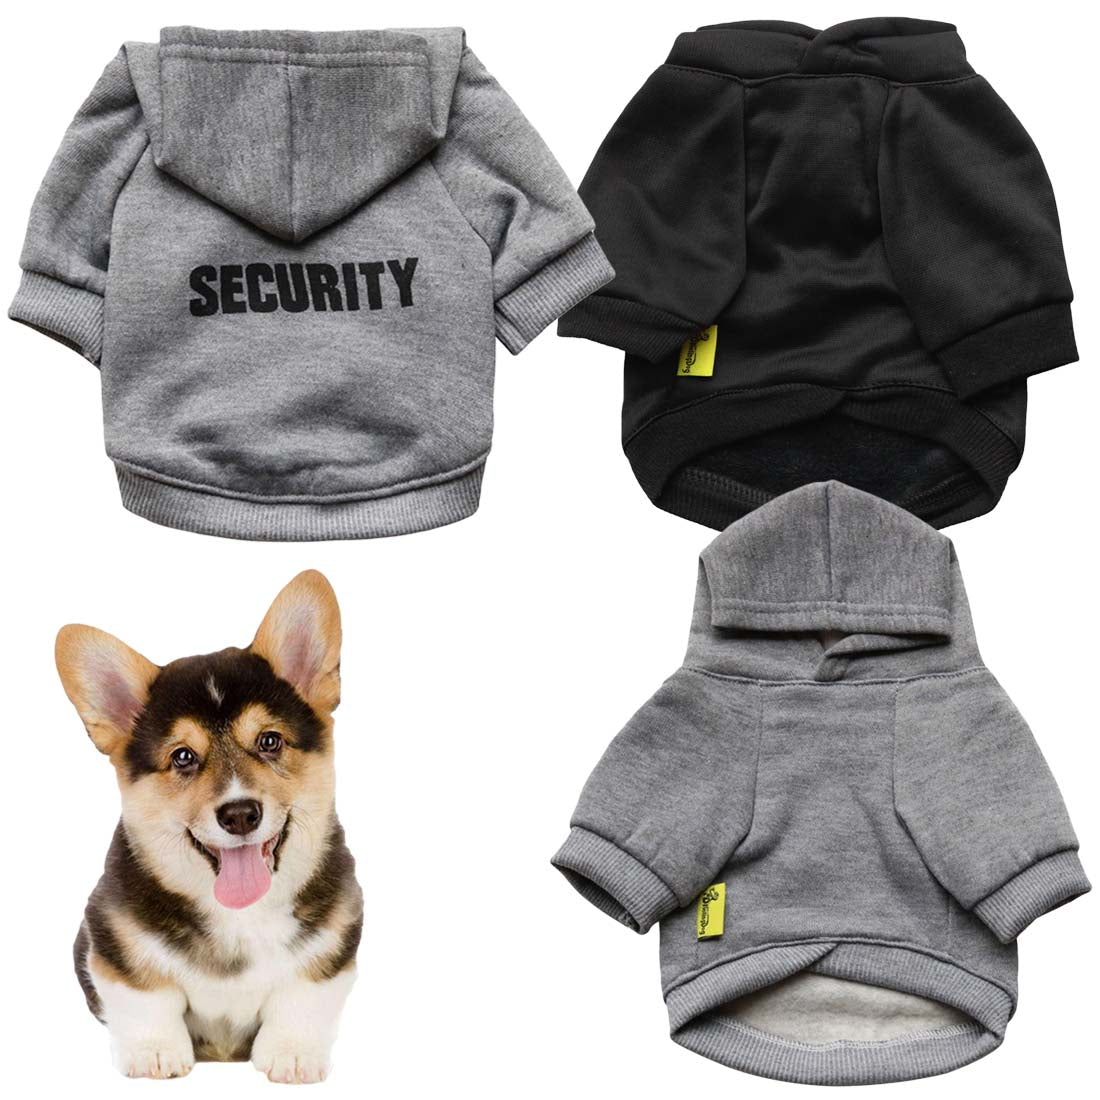 Elegant Security Print Hoodies For Dogs - The Hoodie Store